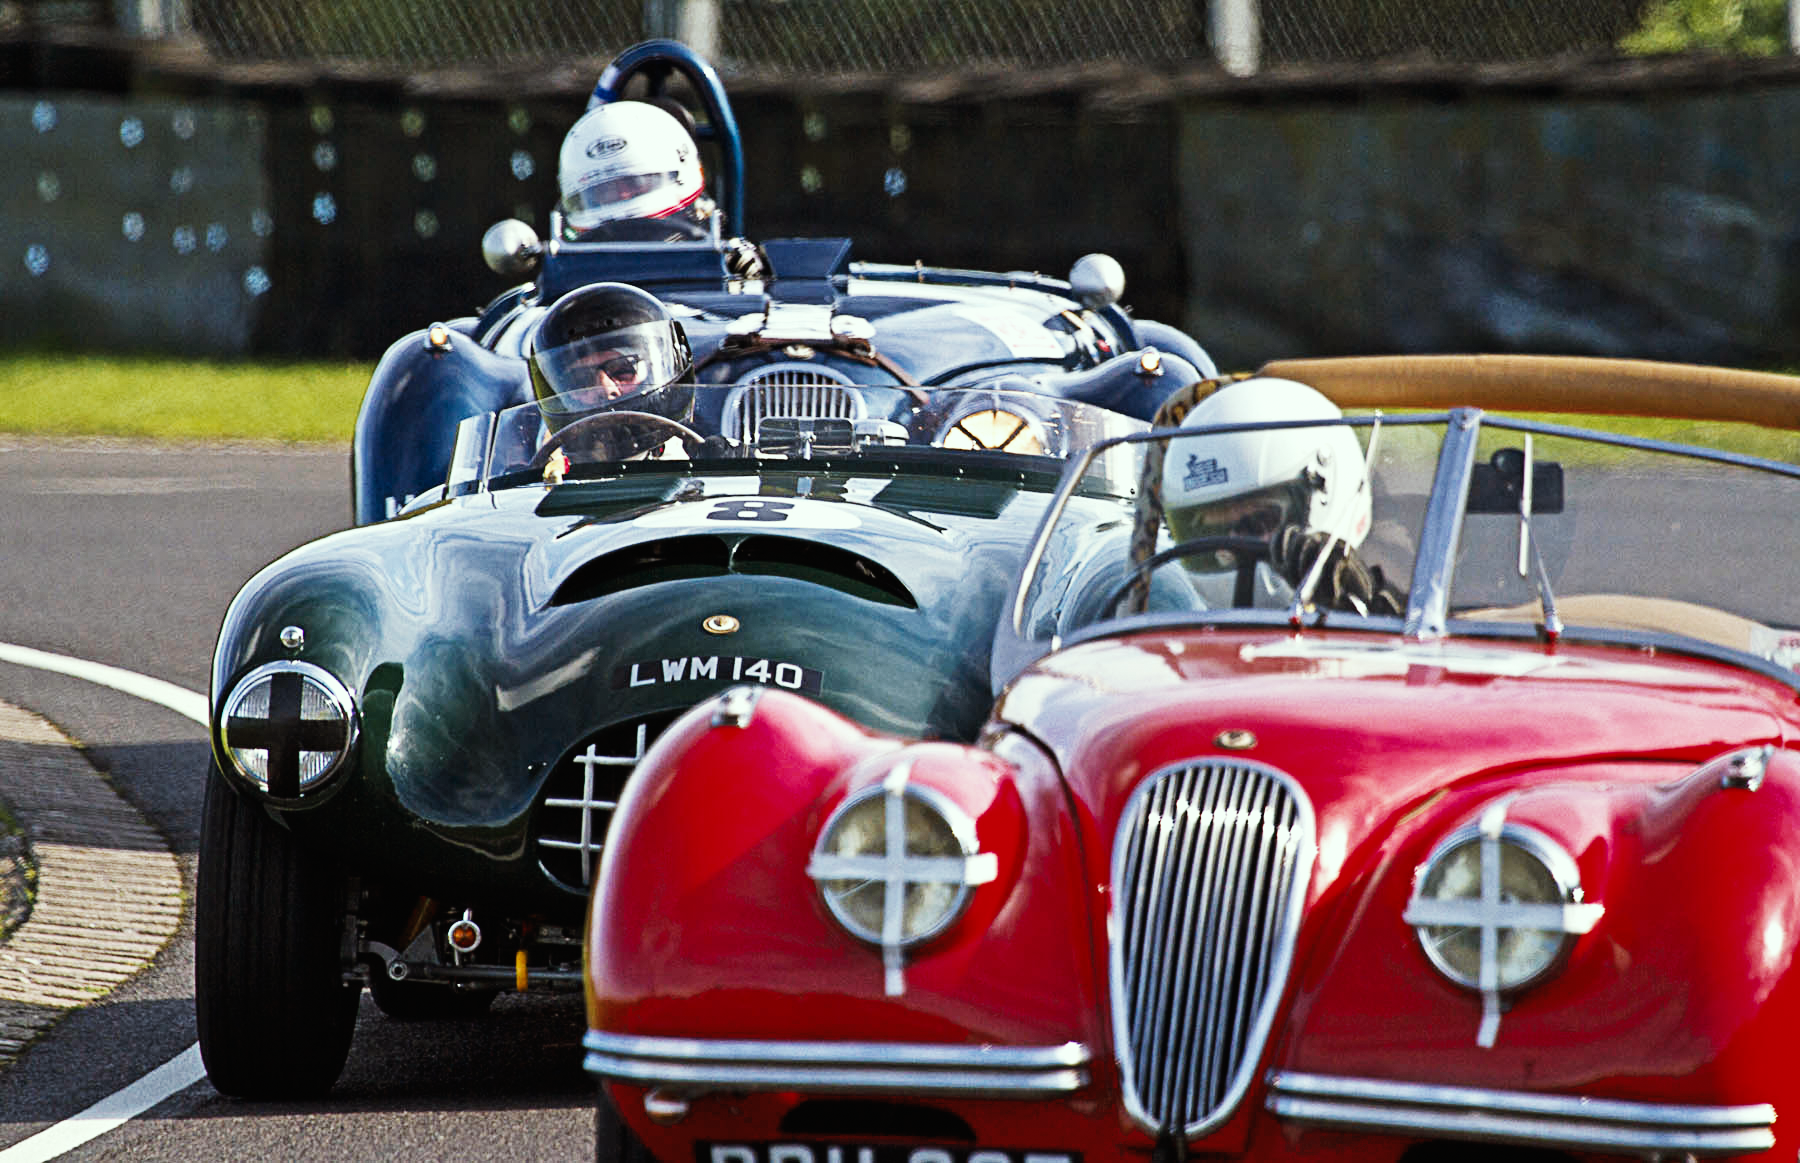 Why do the vintage race cars have taped headlights? | by Gábor Balogh |  Medium